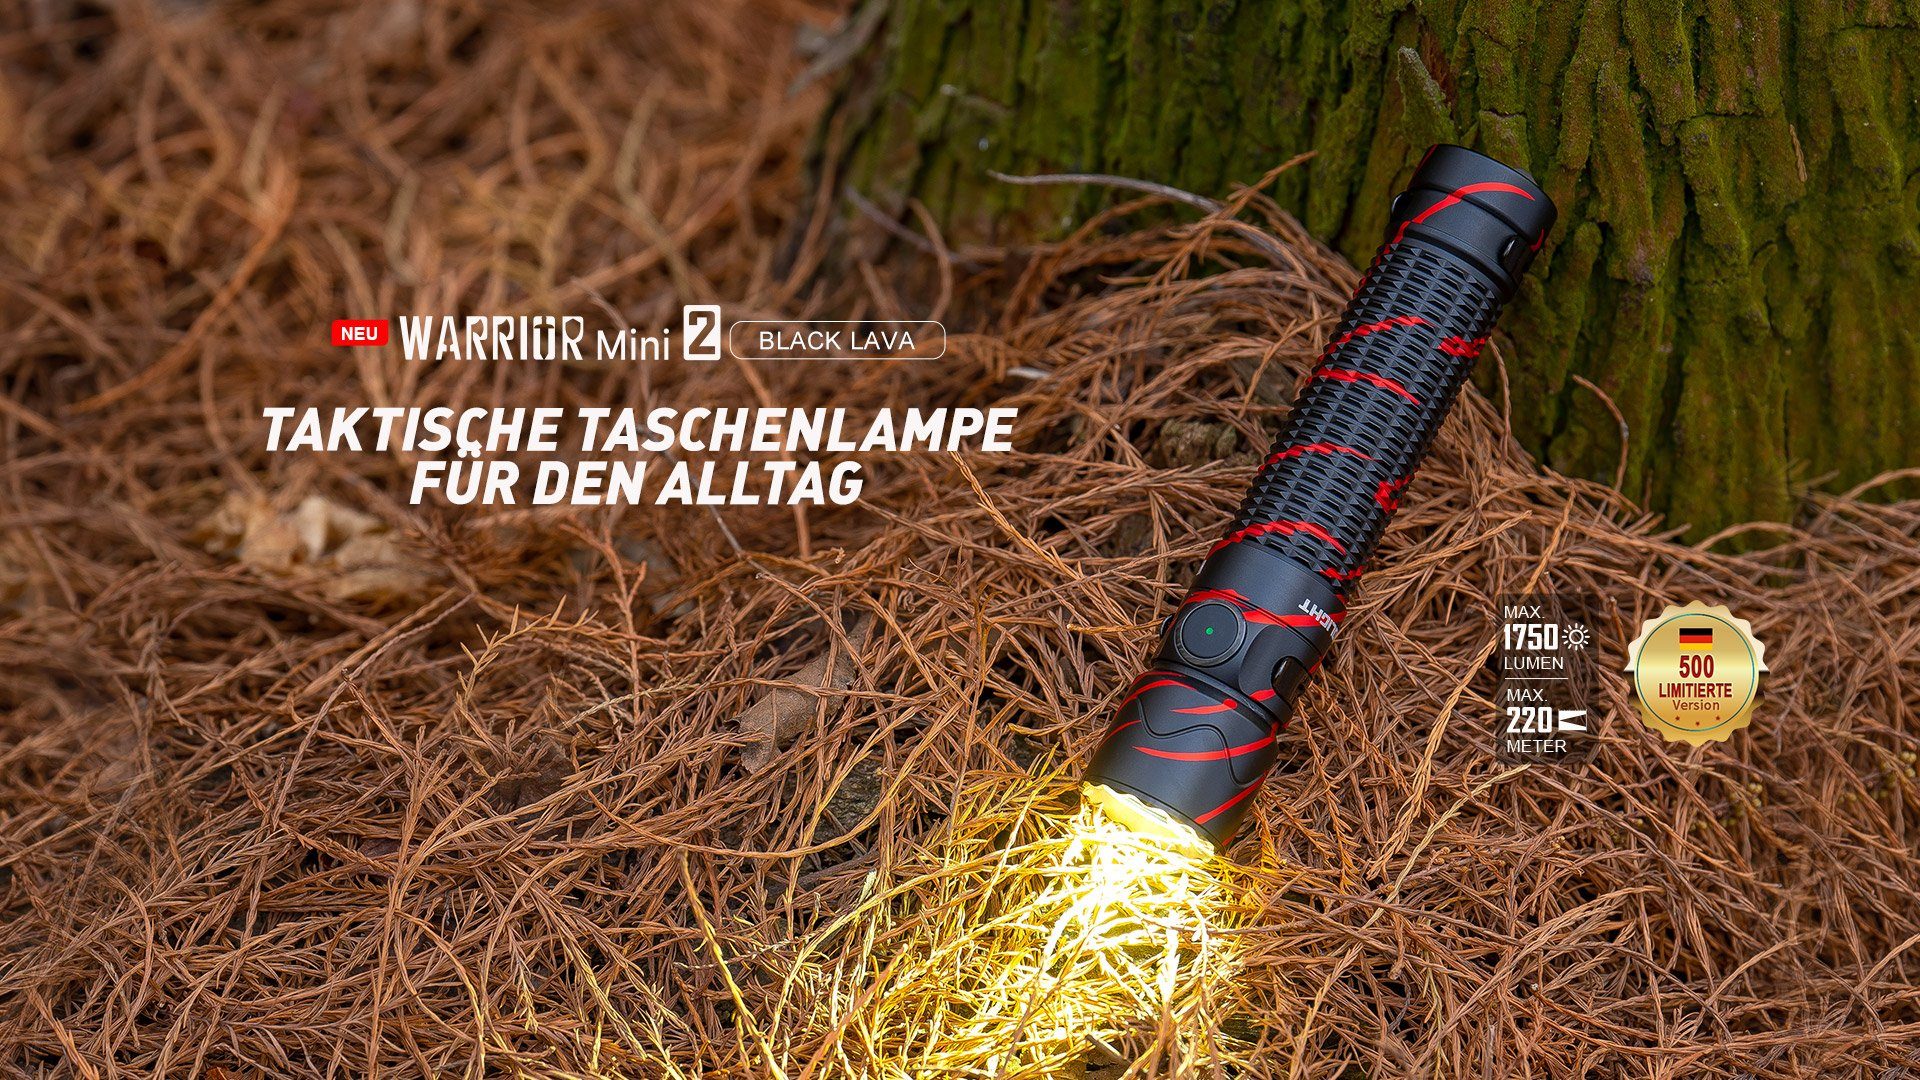 OLIGHT Taschenlampe Warrior Mini 5 Lumen 2 Black Taschenlampe, 1750 LED Lava Taktische Modi